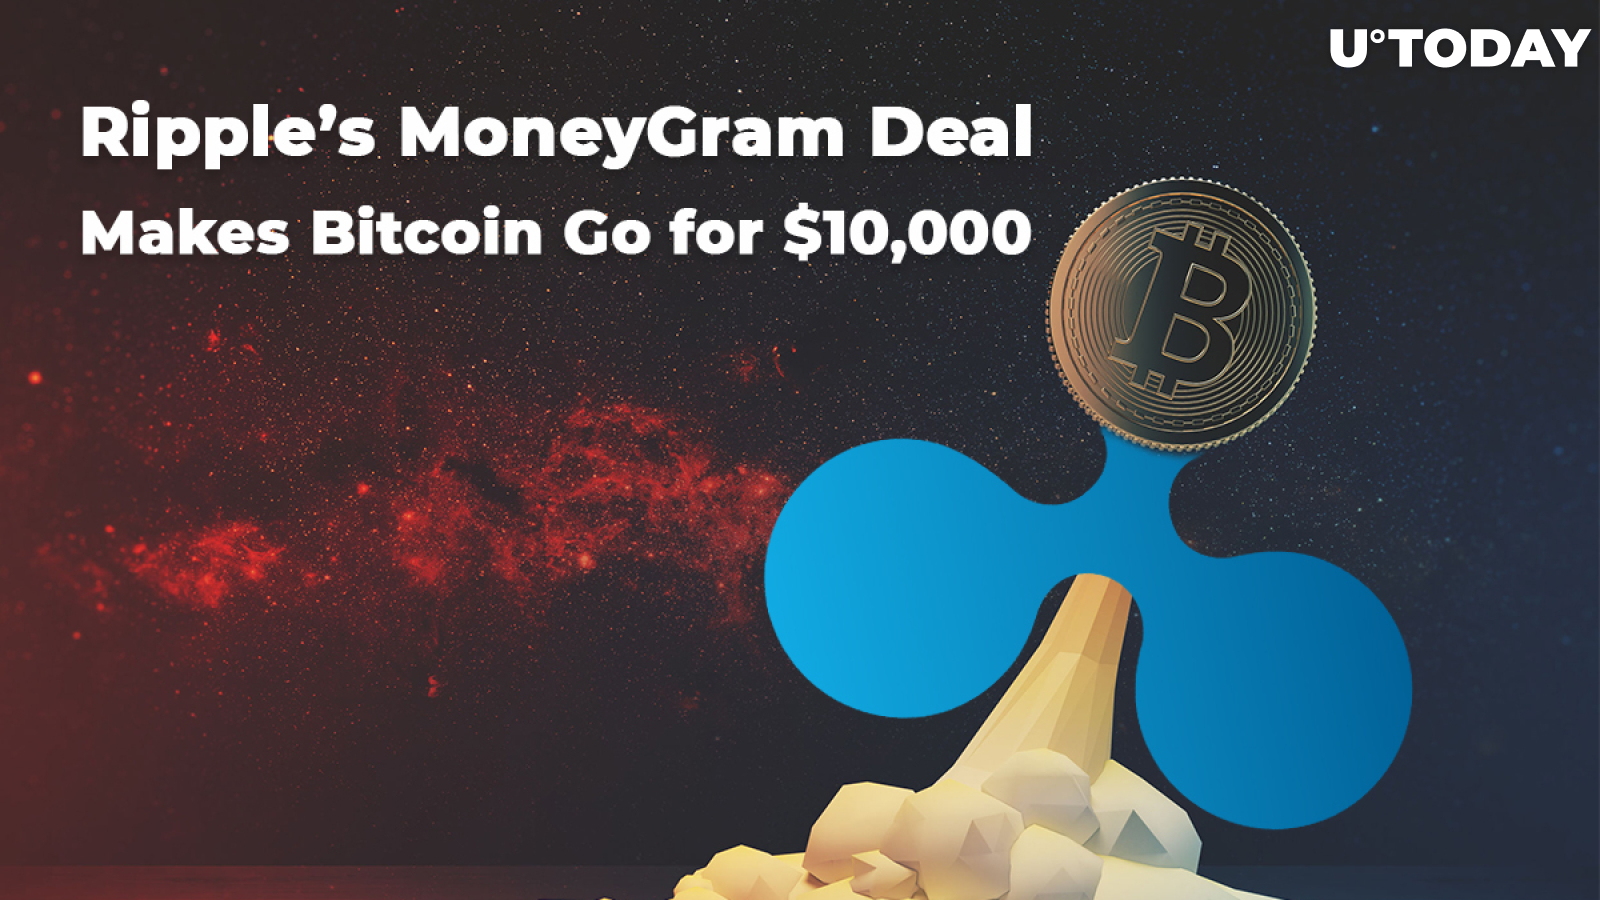 Ripple’s MoneyGram Deal Makes Bitcoin Go for $10,000